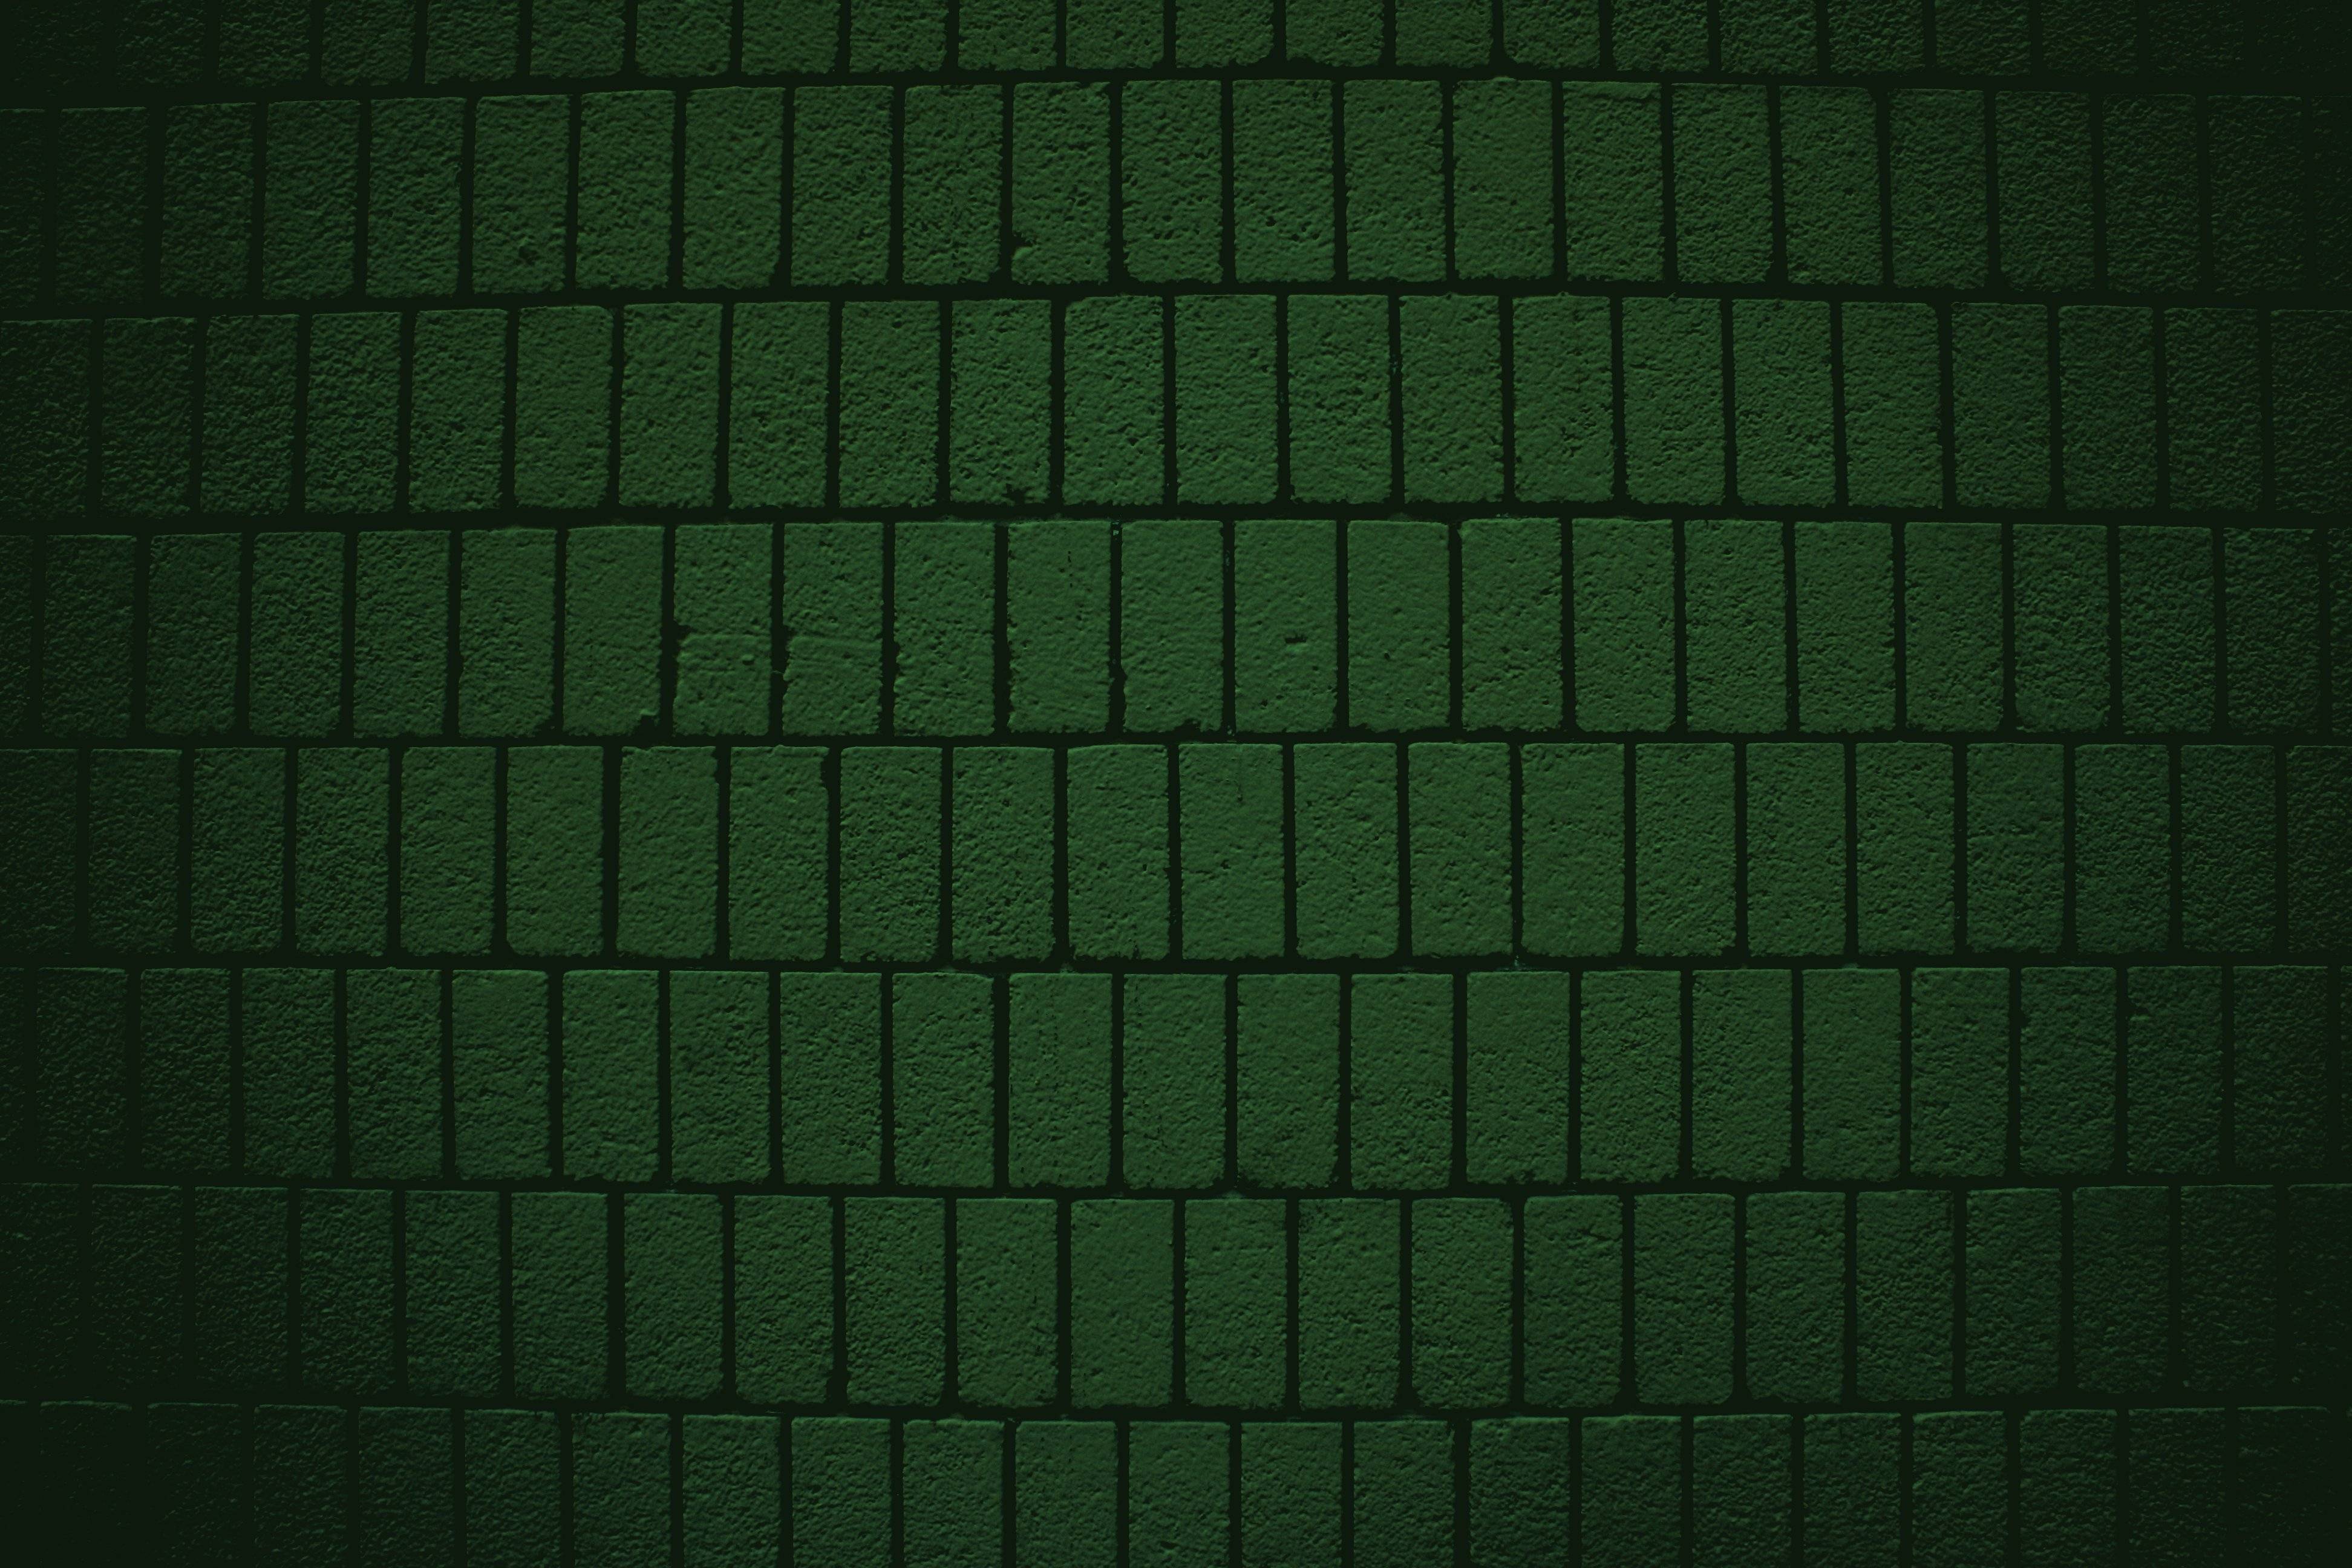 Dark Green Brick Wall Texture with Vertical Bricks Picture. Free